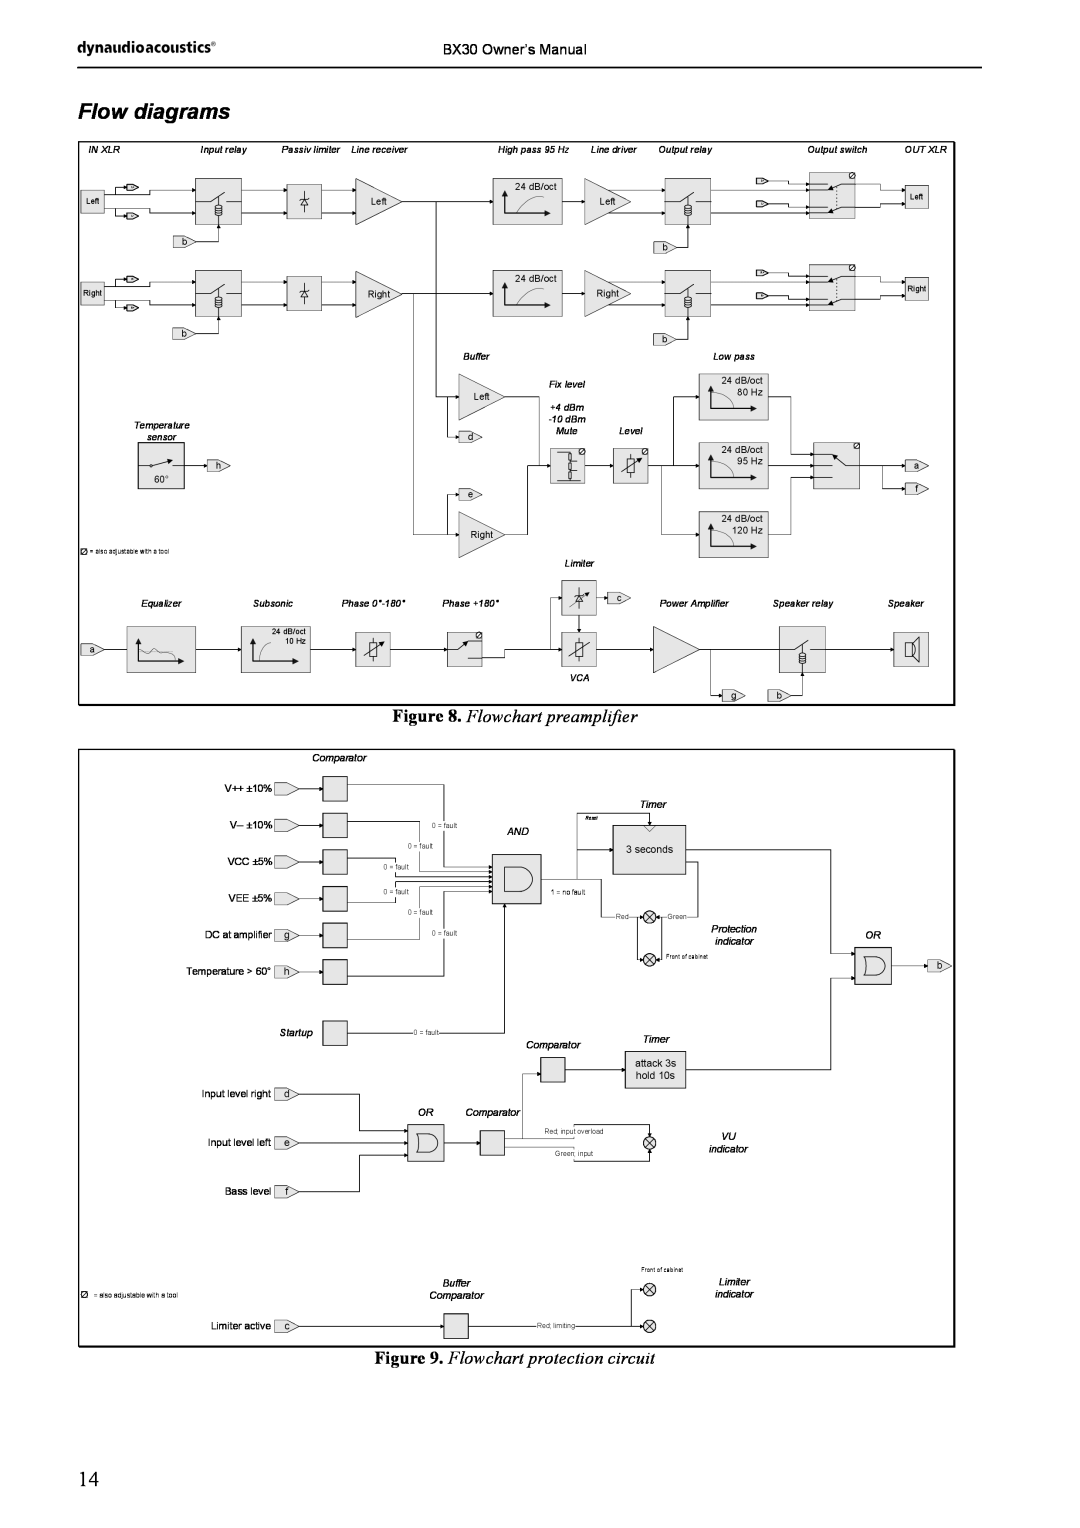 Dynaudio BX30 owner manual Flow diagrams, Flowchart preamplifier, Flowchart protection circuit 